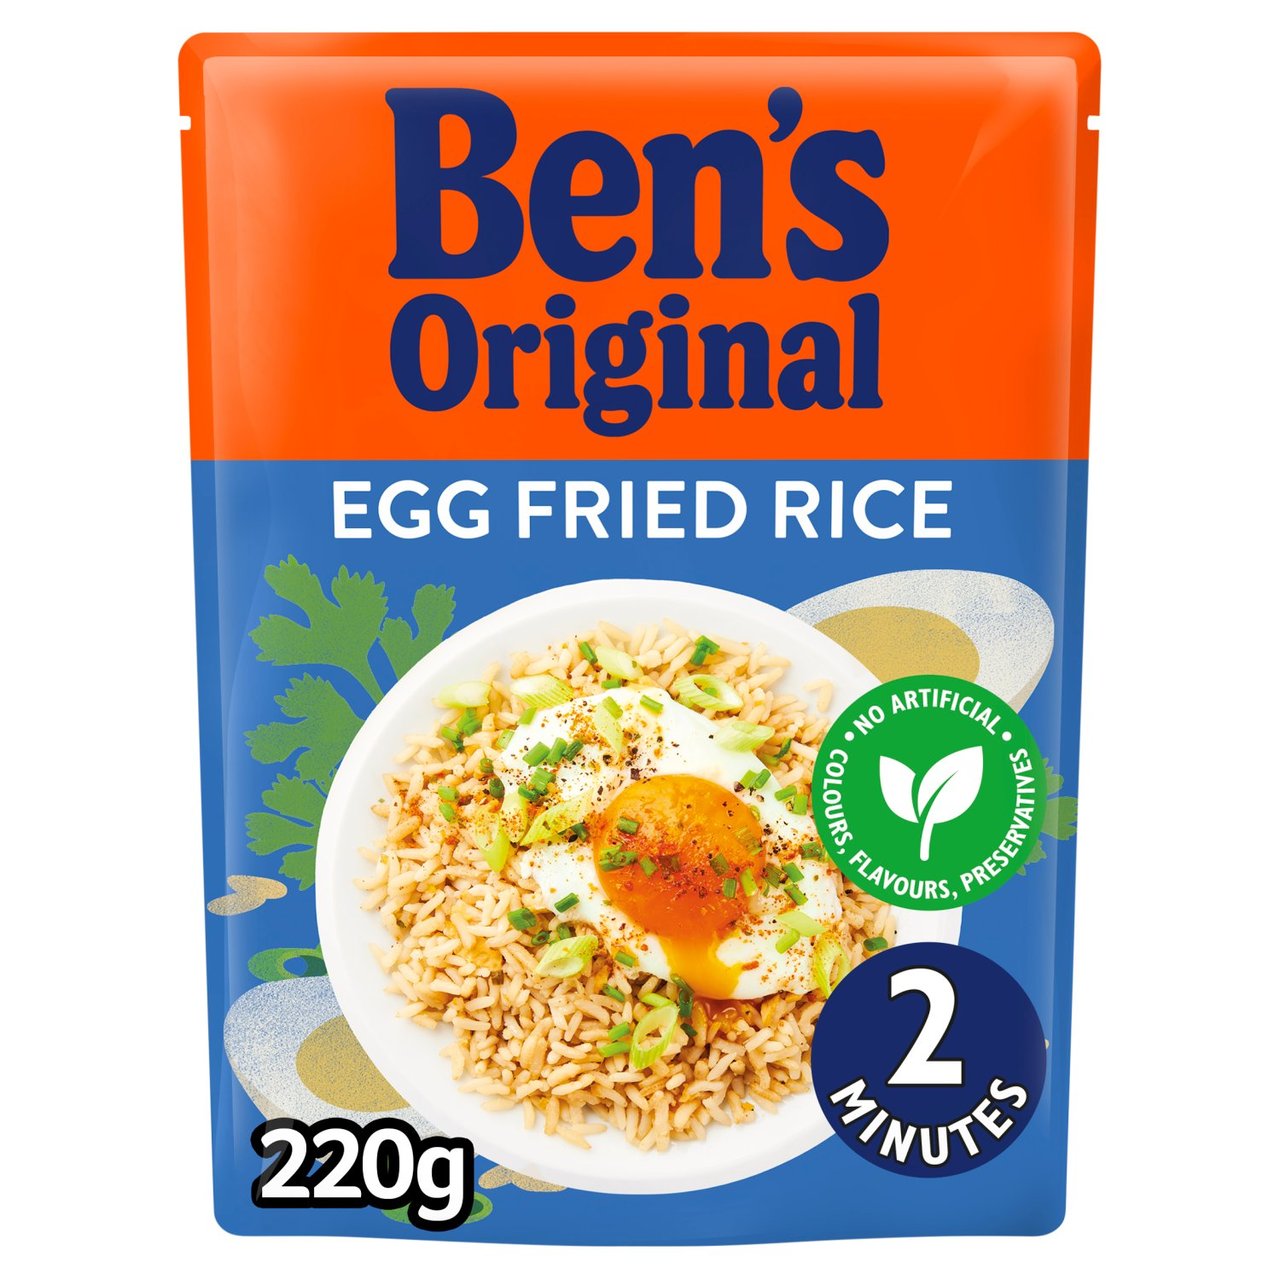 Bens Original Egg Fried Style Microwave Rice 220g*